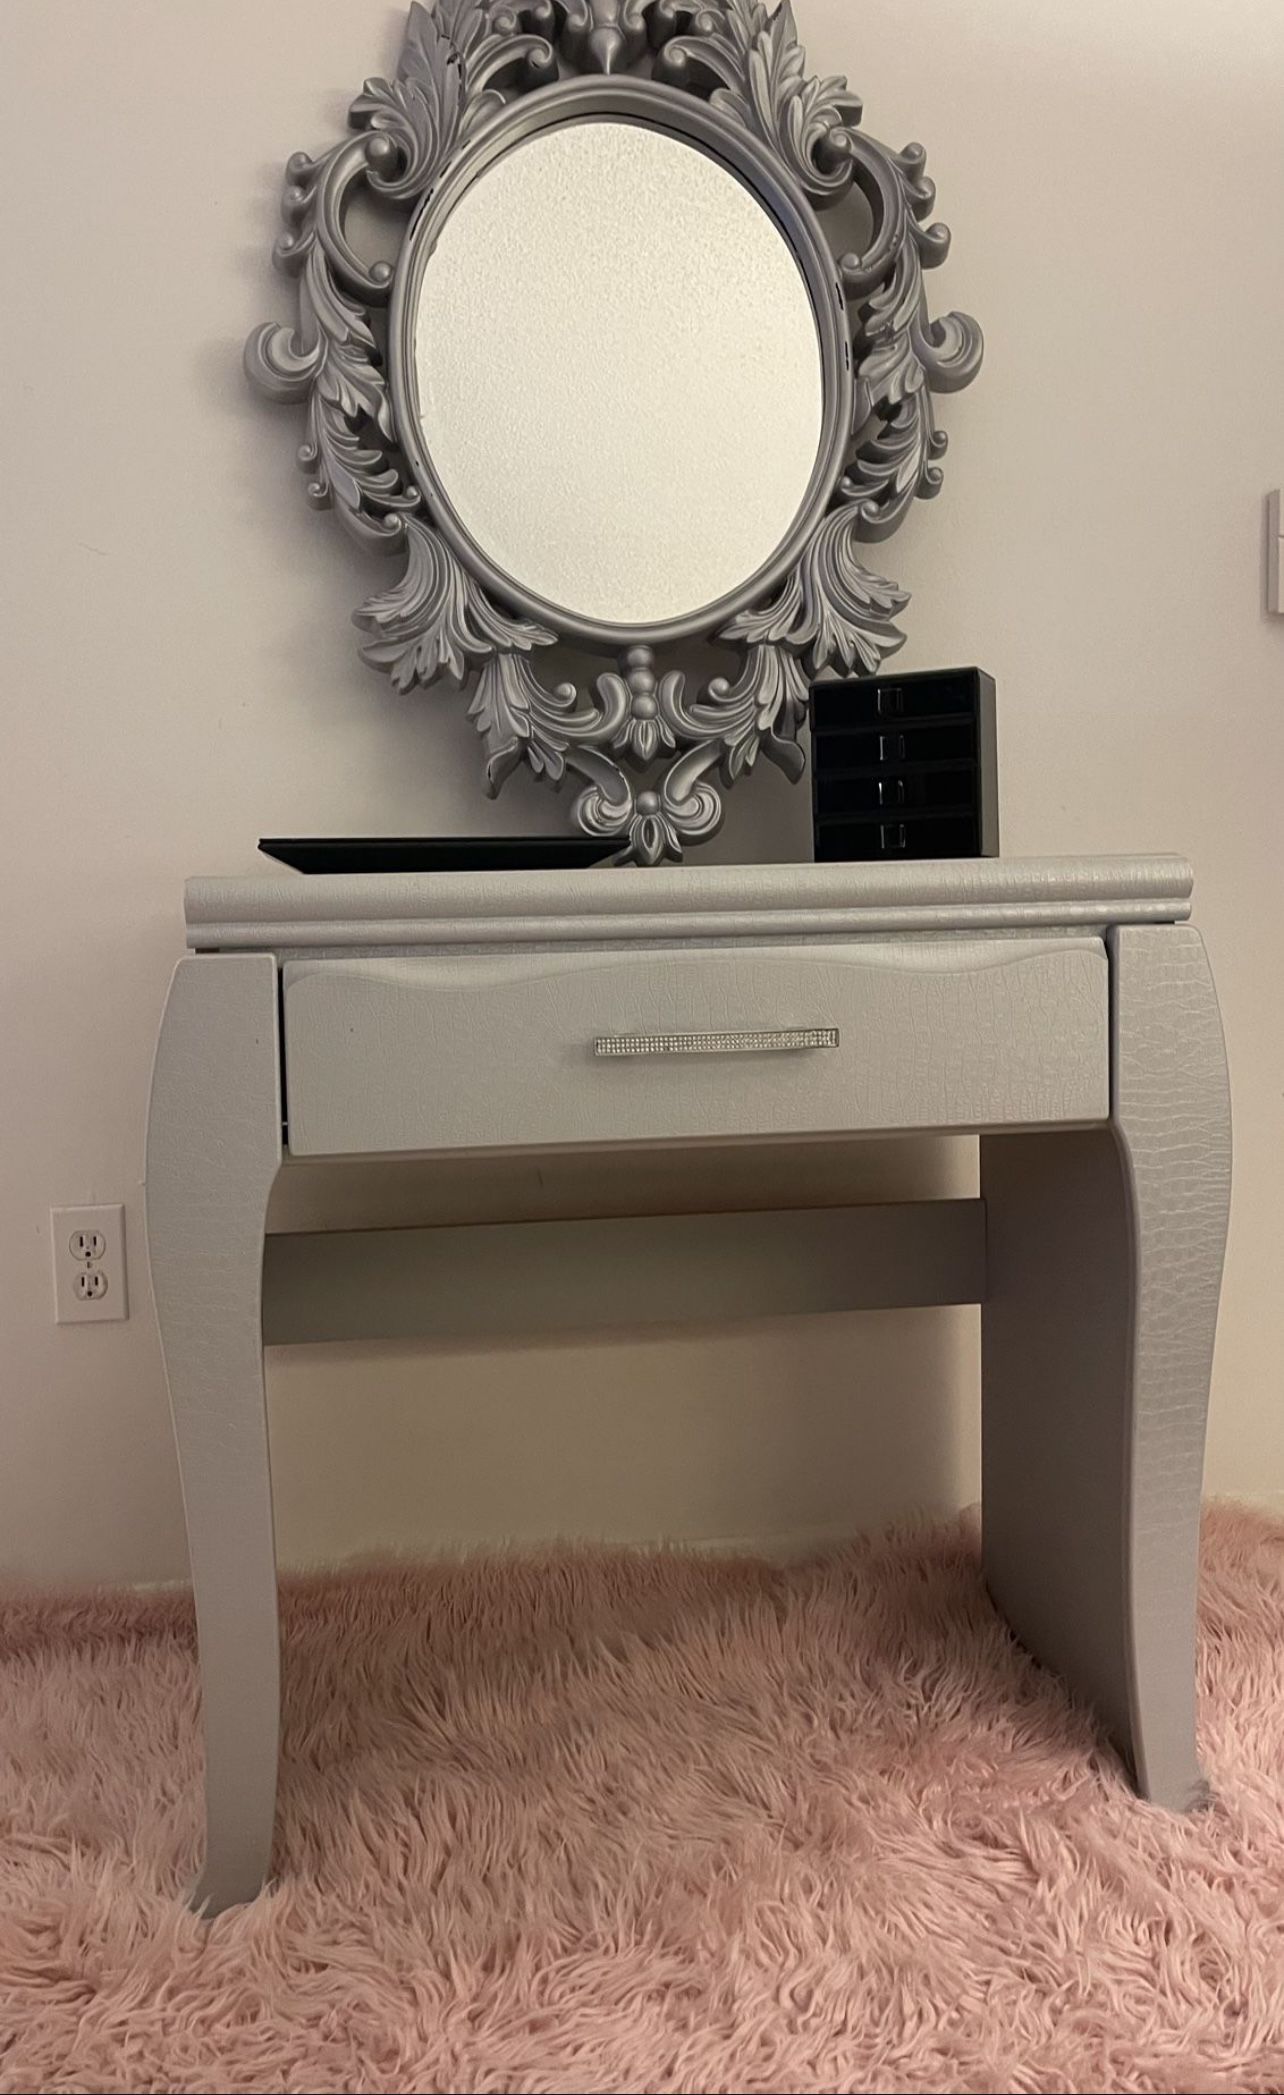 Ashley Furniture Zarollina Vanity And Beautiful Baroque Wall Mirror Silver Chic Mirror Home Decor